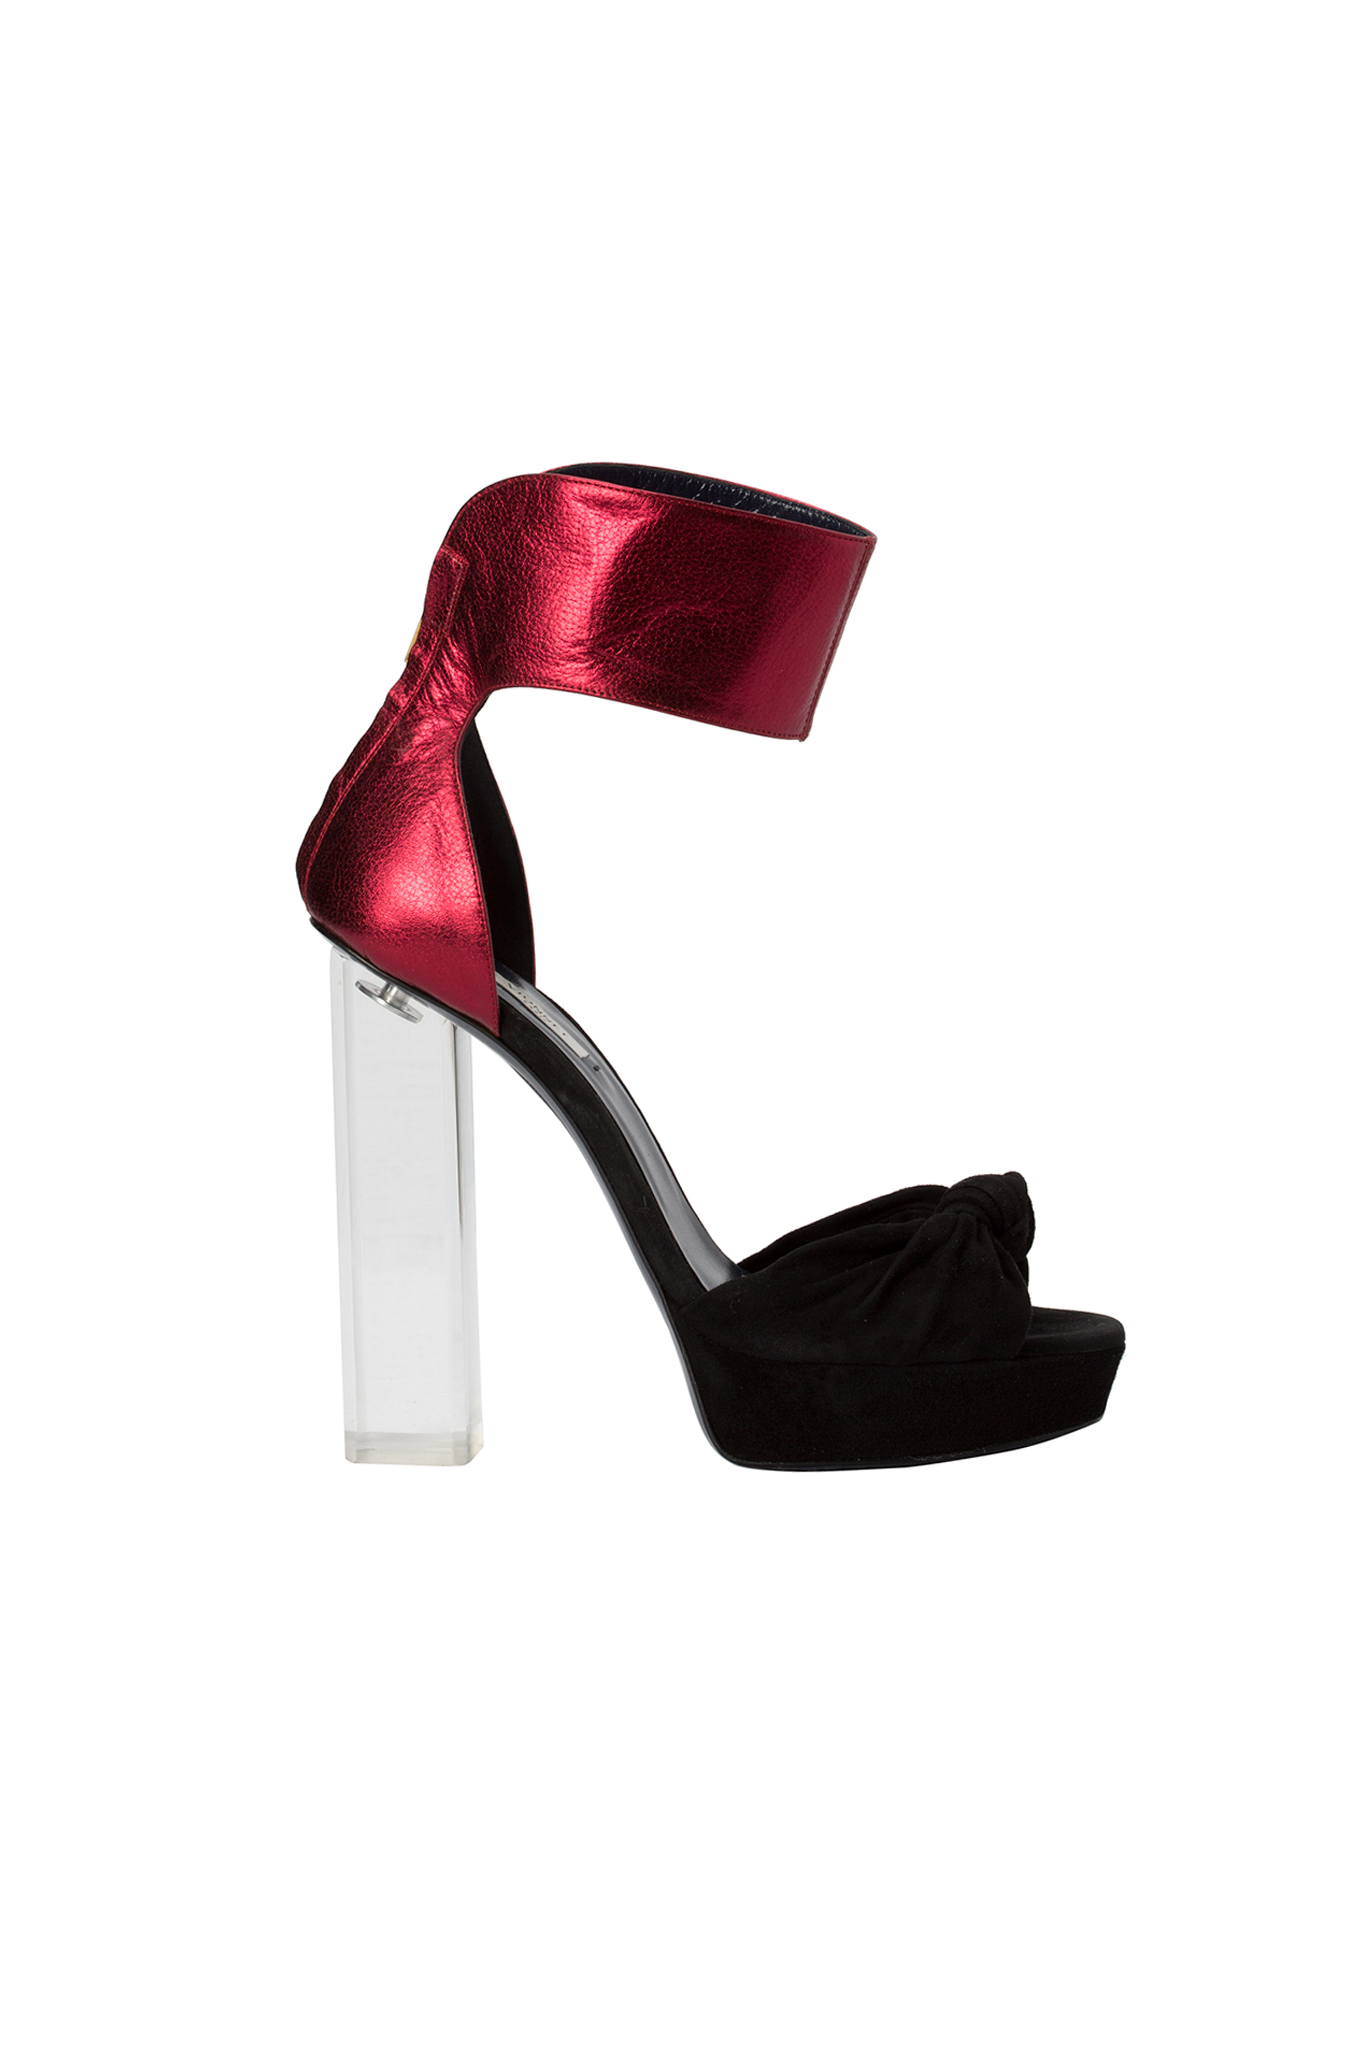 04-07-accessories-trends-fall-2015-lucite-heel.jpg